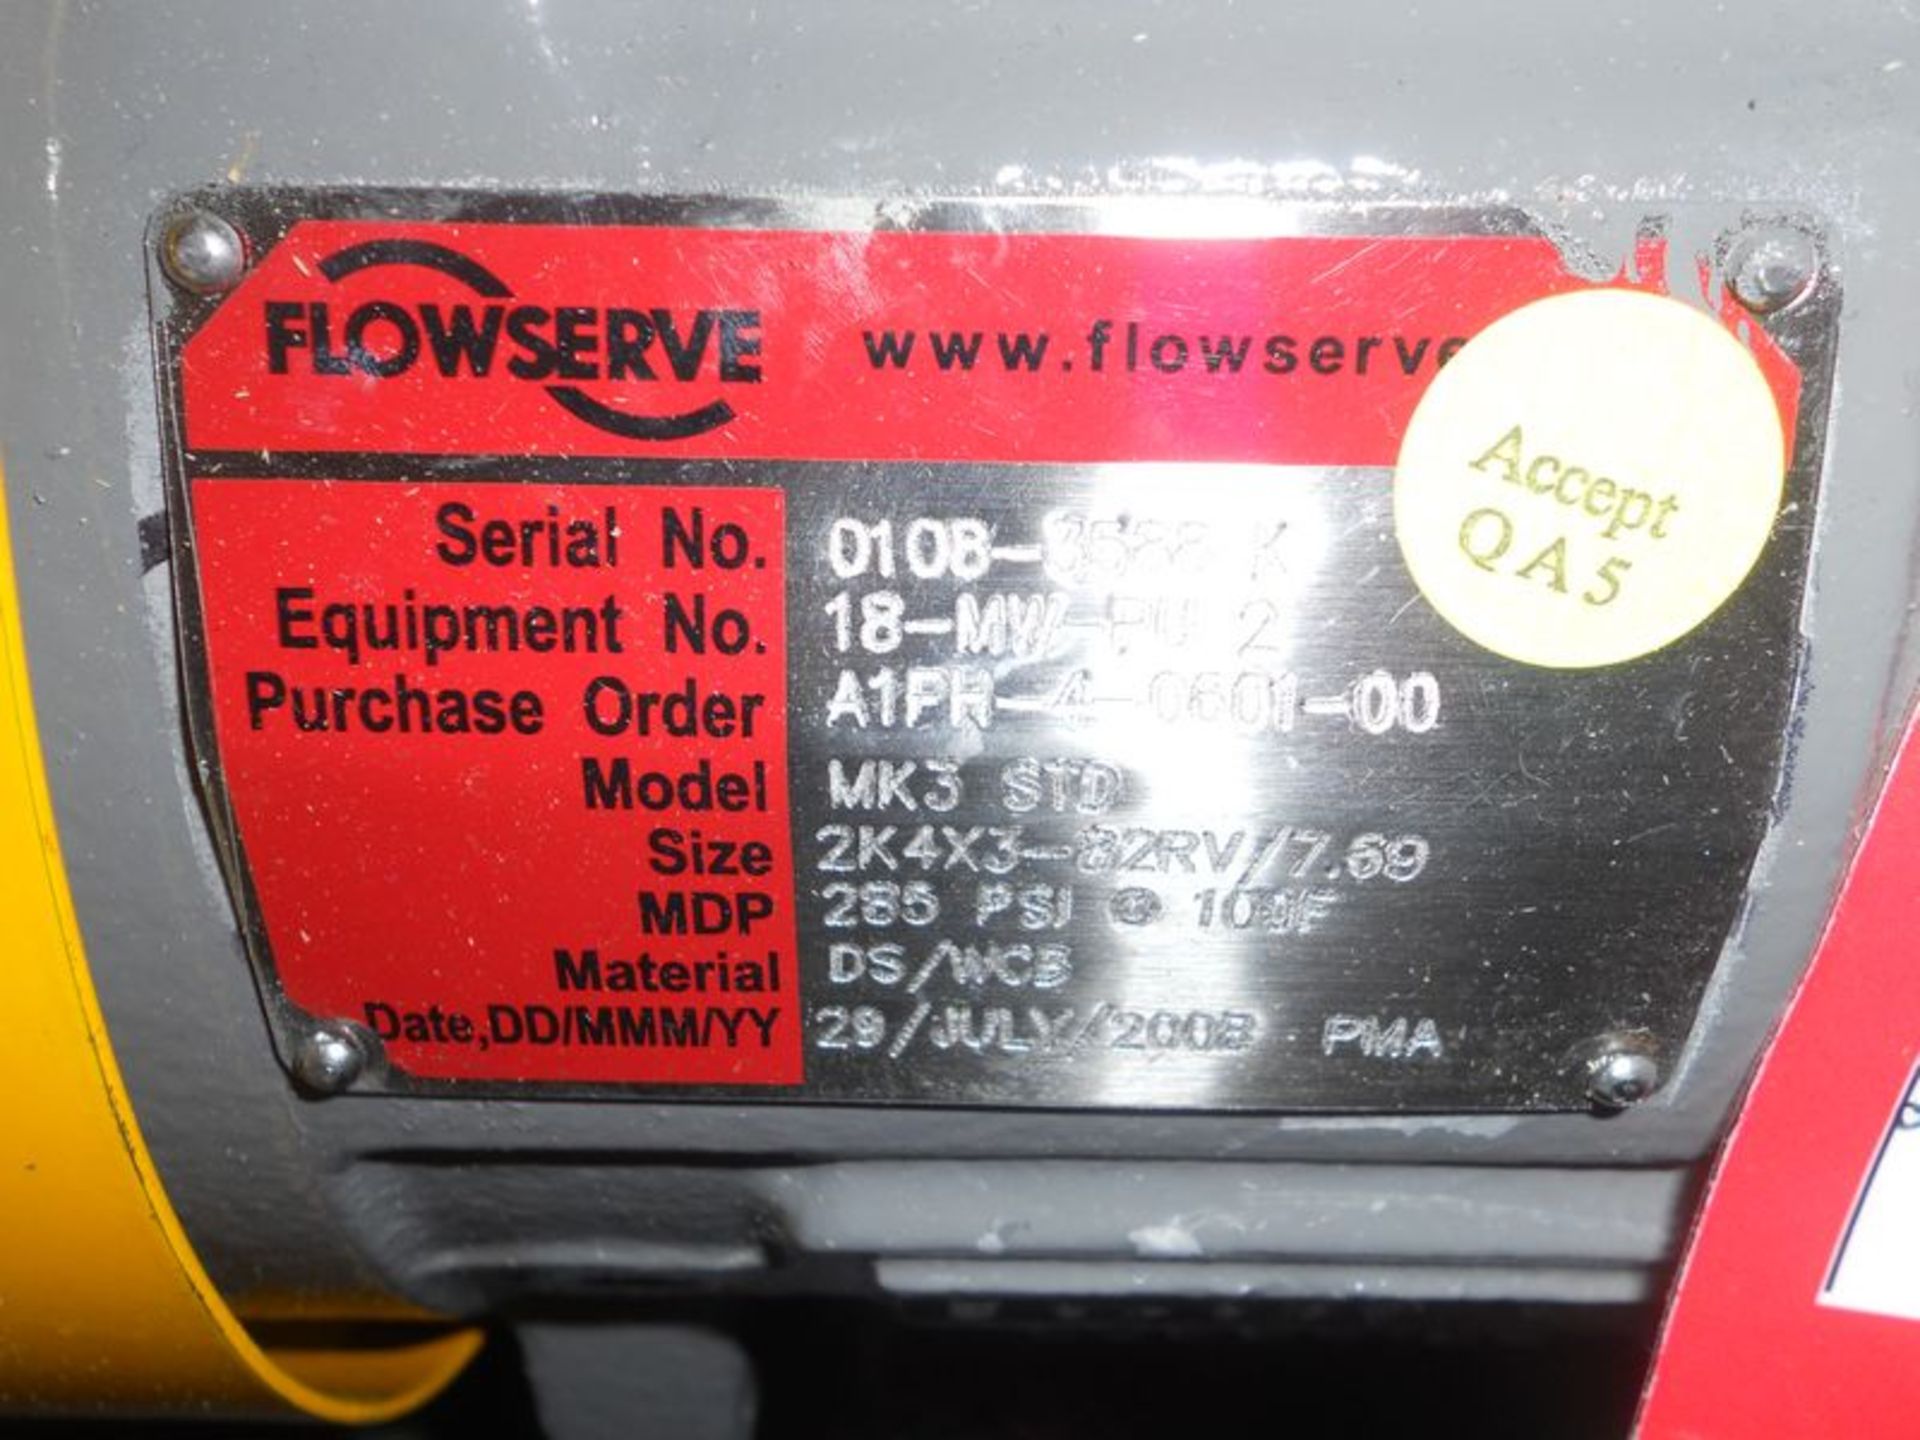 FlowServe MK3 STD centrifugal pump, S/N 0108-3591-K, 4" X 3", 60 HP, MDP 285 psi @ 100 DegF, Size - Image 5 of 6